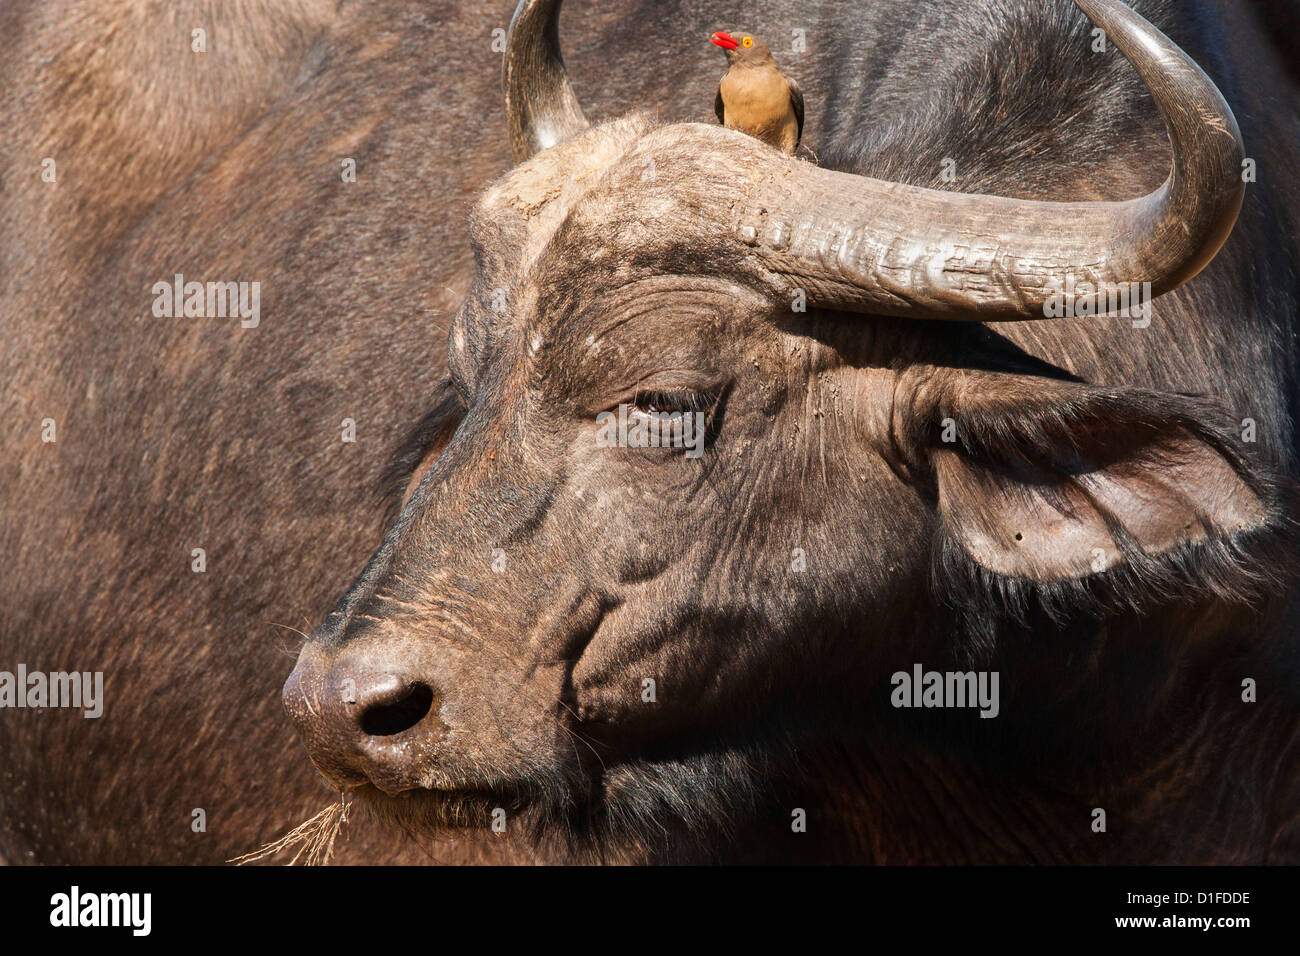 Cape buffalo (Syncerus caffer) with redbilled oxpecker, Hluhluwe-Imfolozi Park, KwaZulu Natal, South Africa, Africa Stock Photo